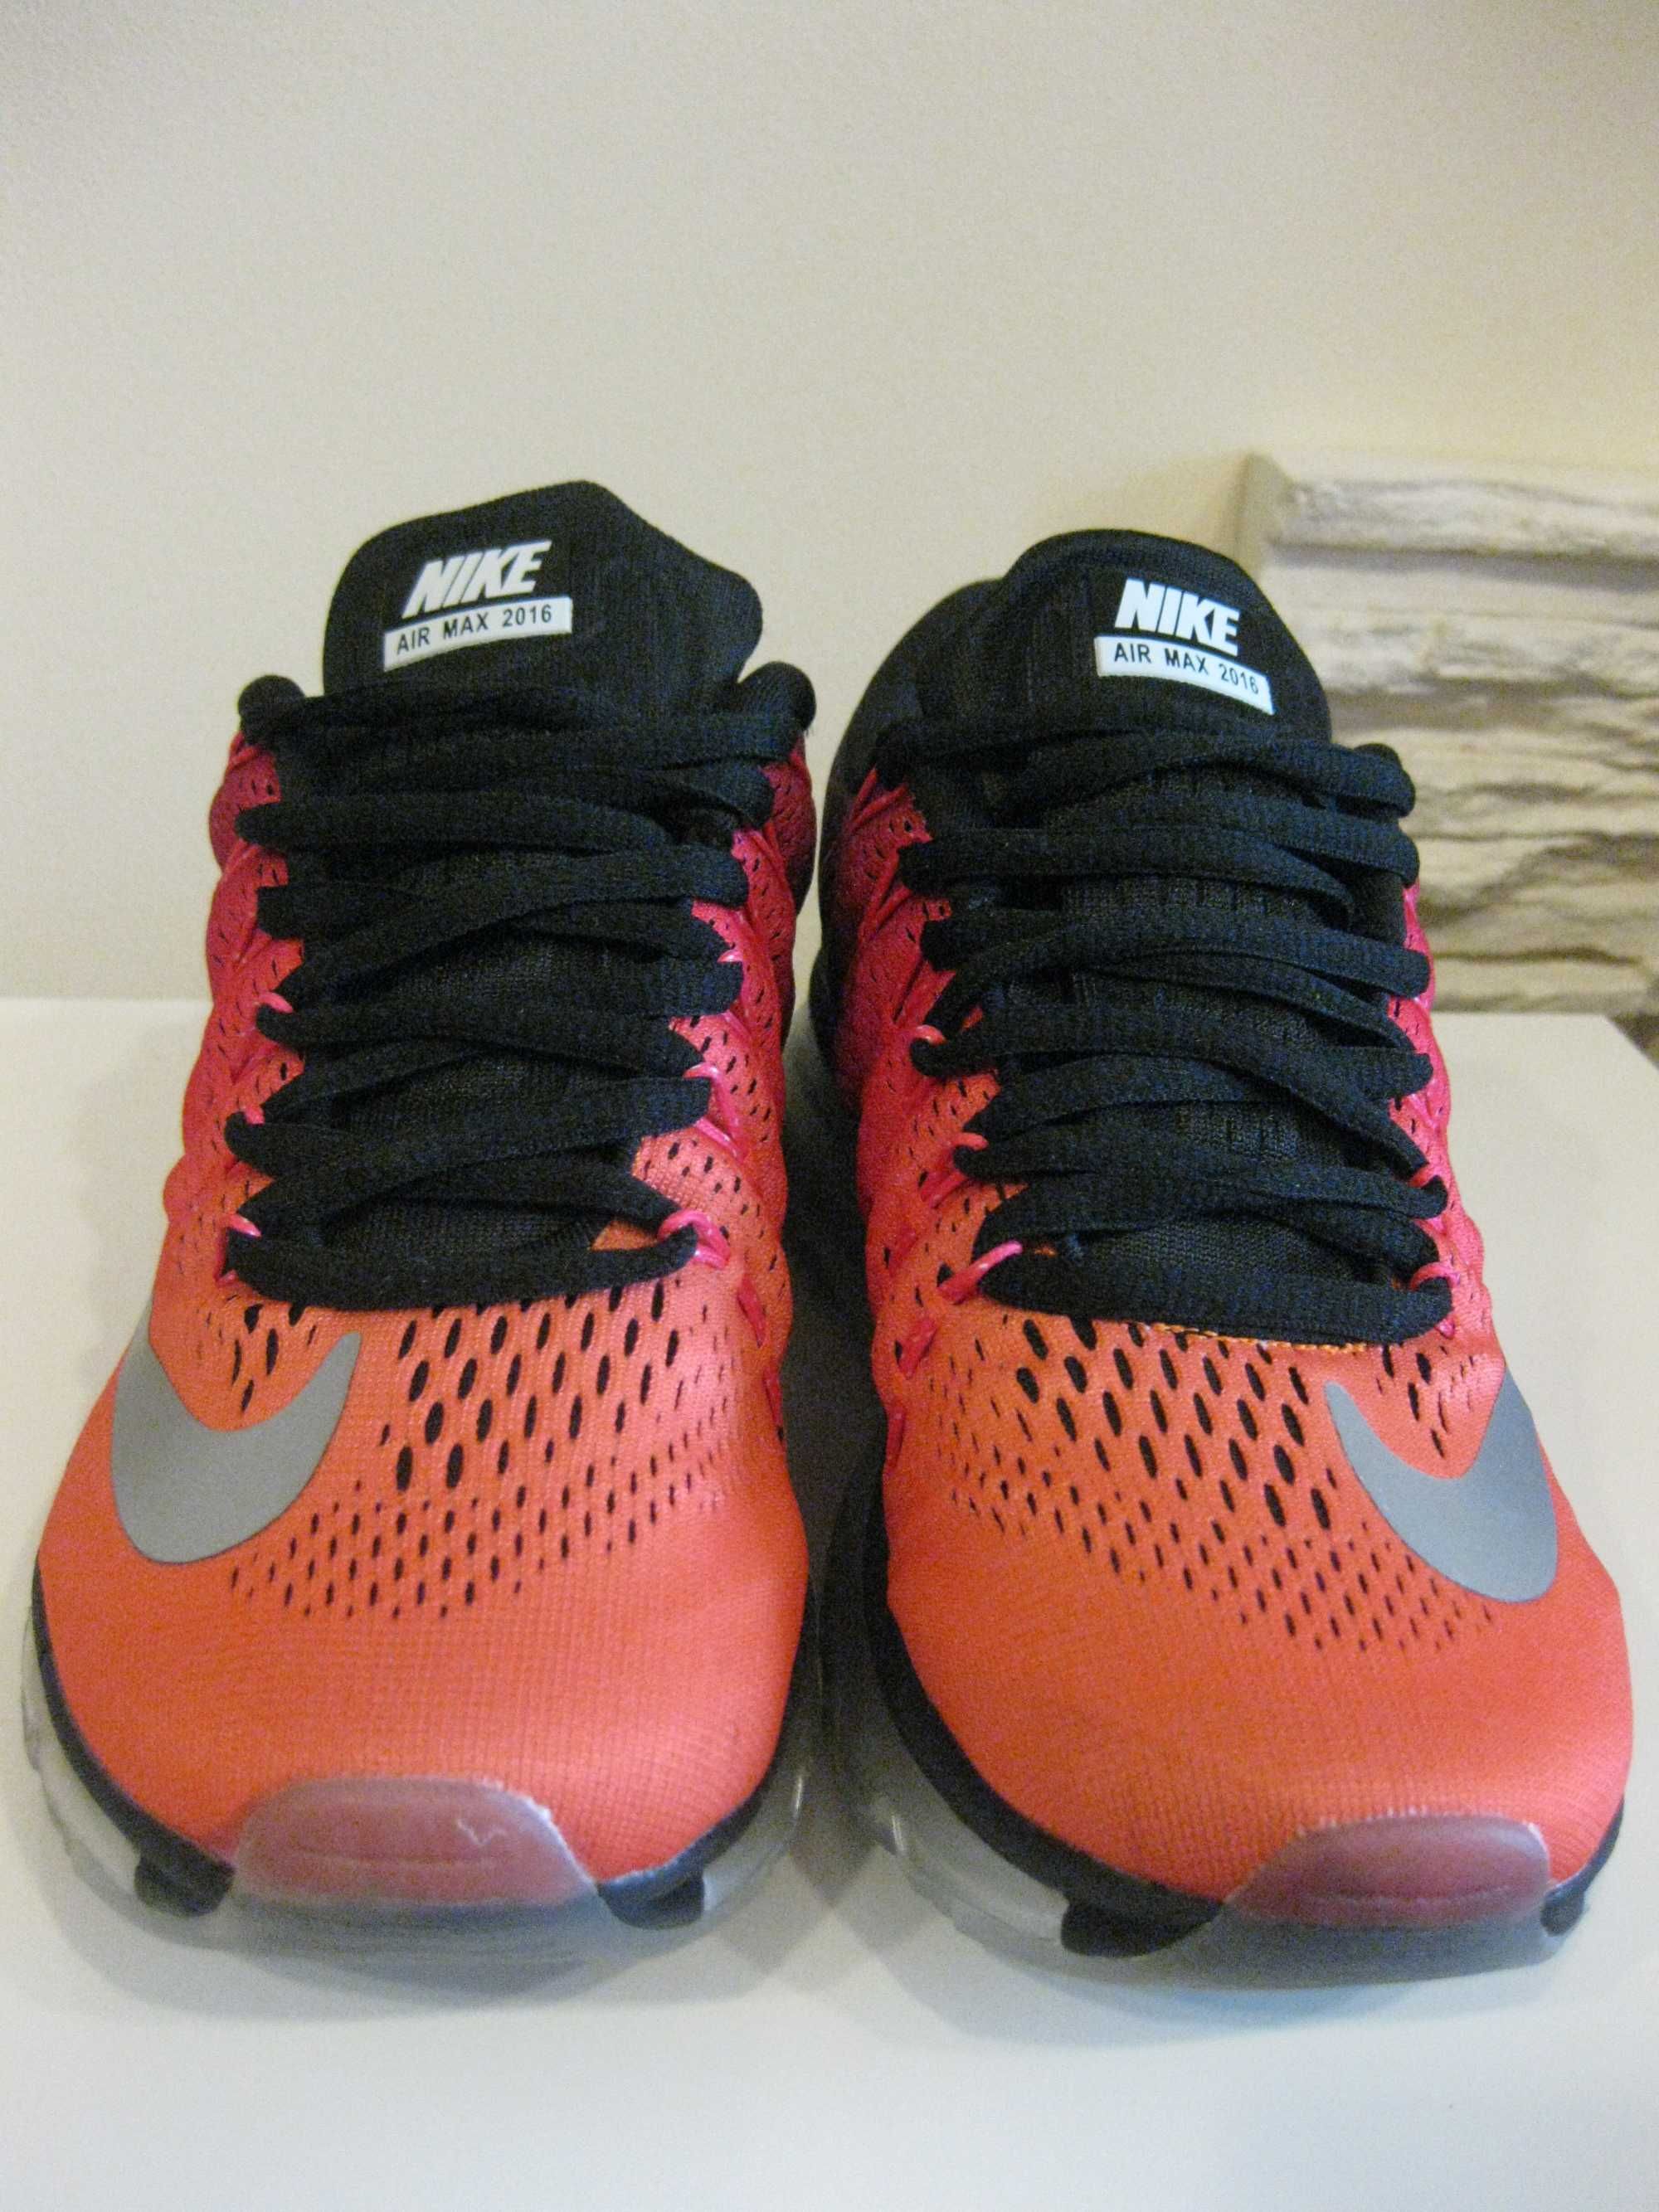 Nike Air Max Premium buty rozm.36,5 (dł.wkł.23cm)